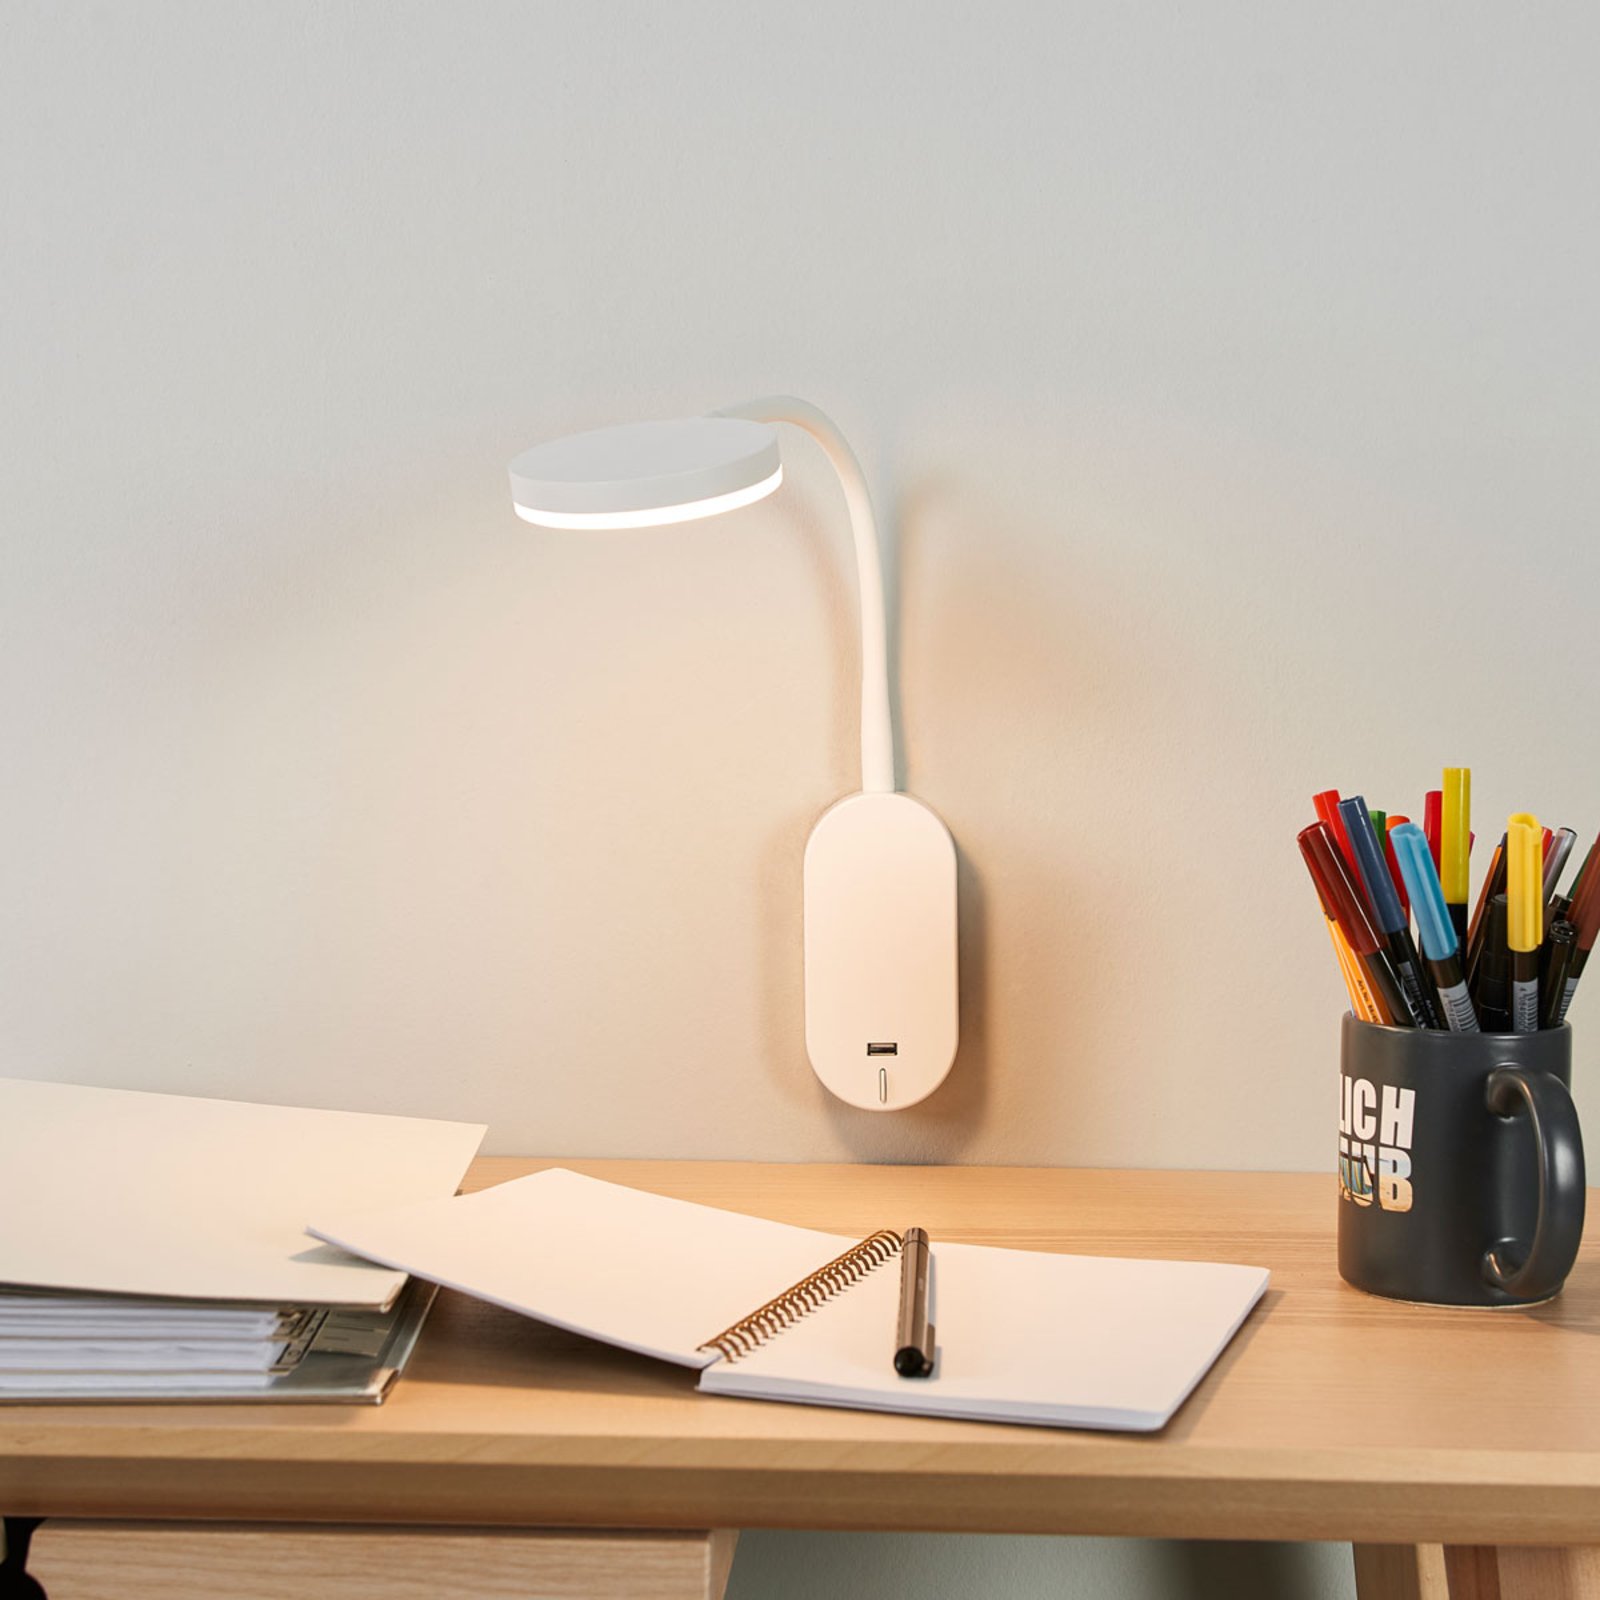 Nástenné svietidlo Lindby LED Milow, biele, 39,5 cm, pripojenie USB